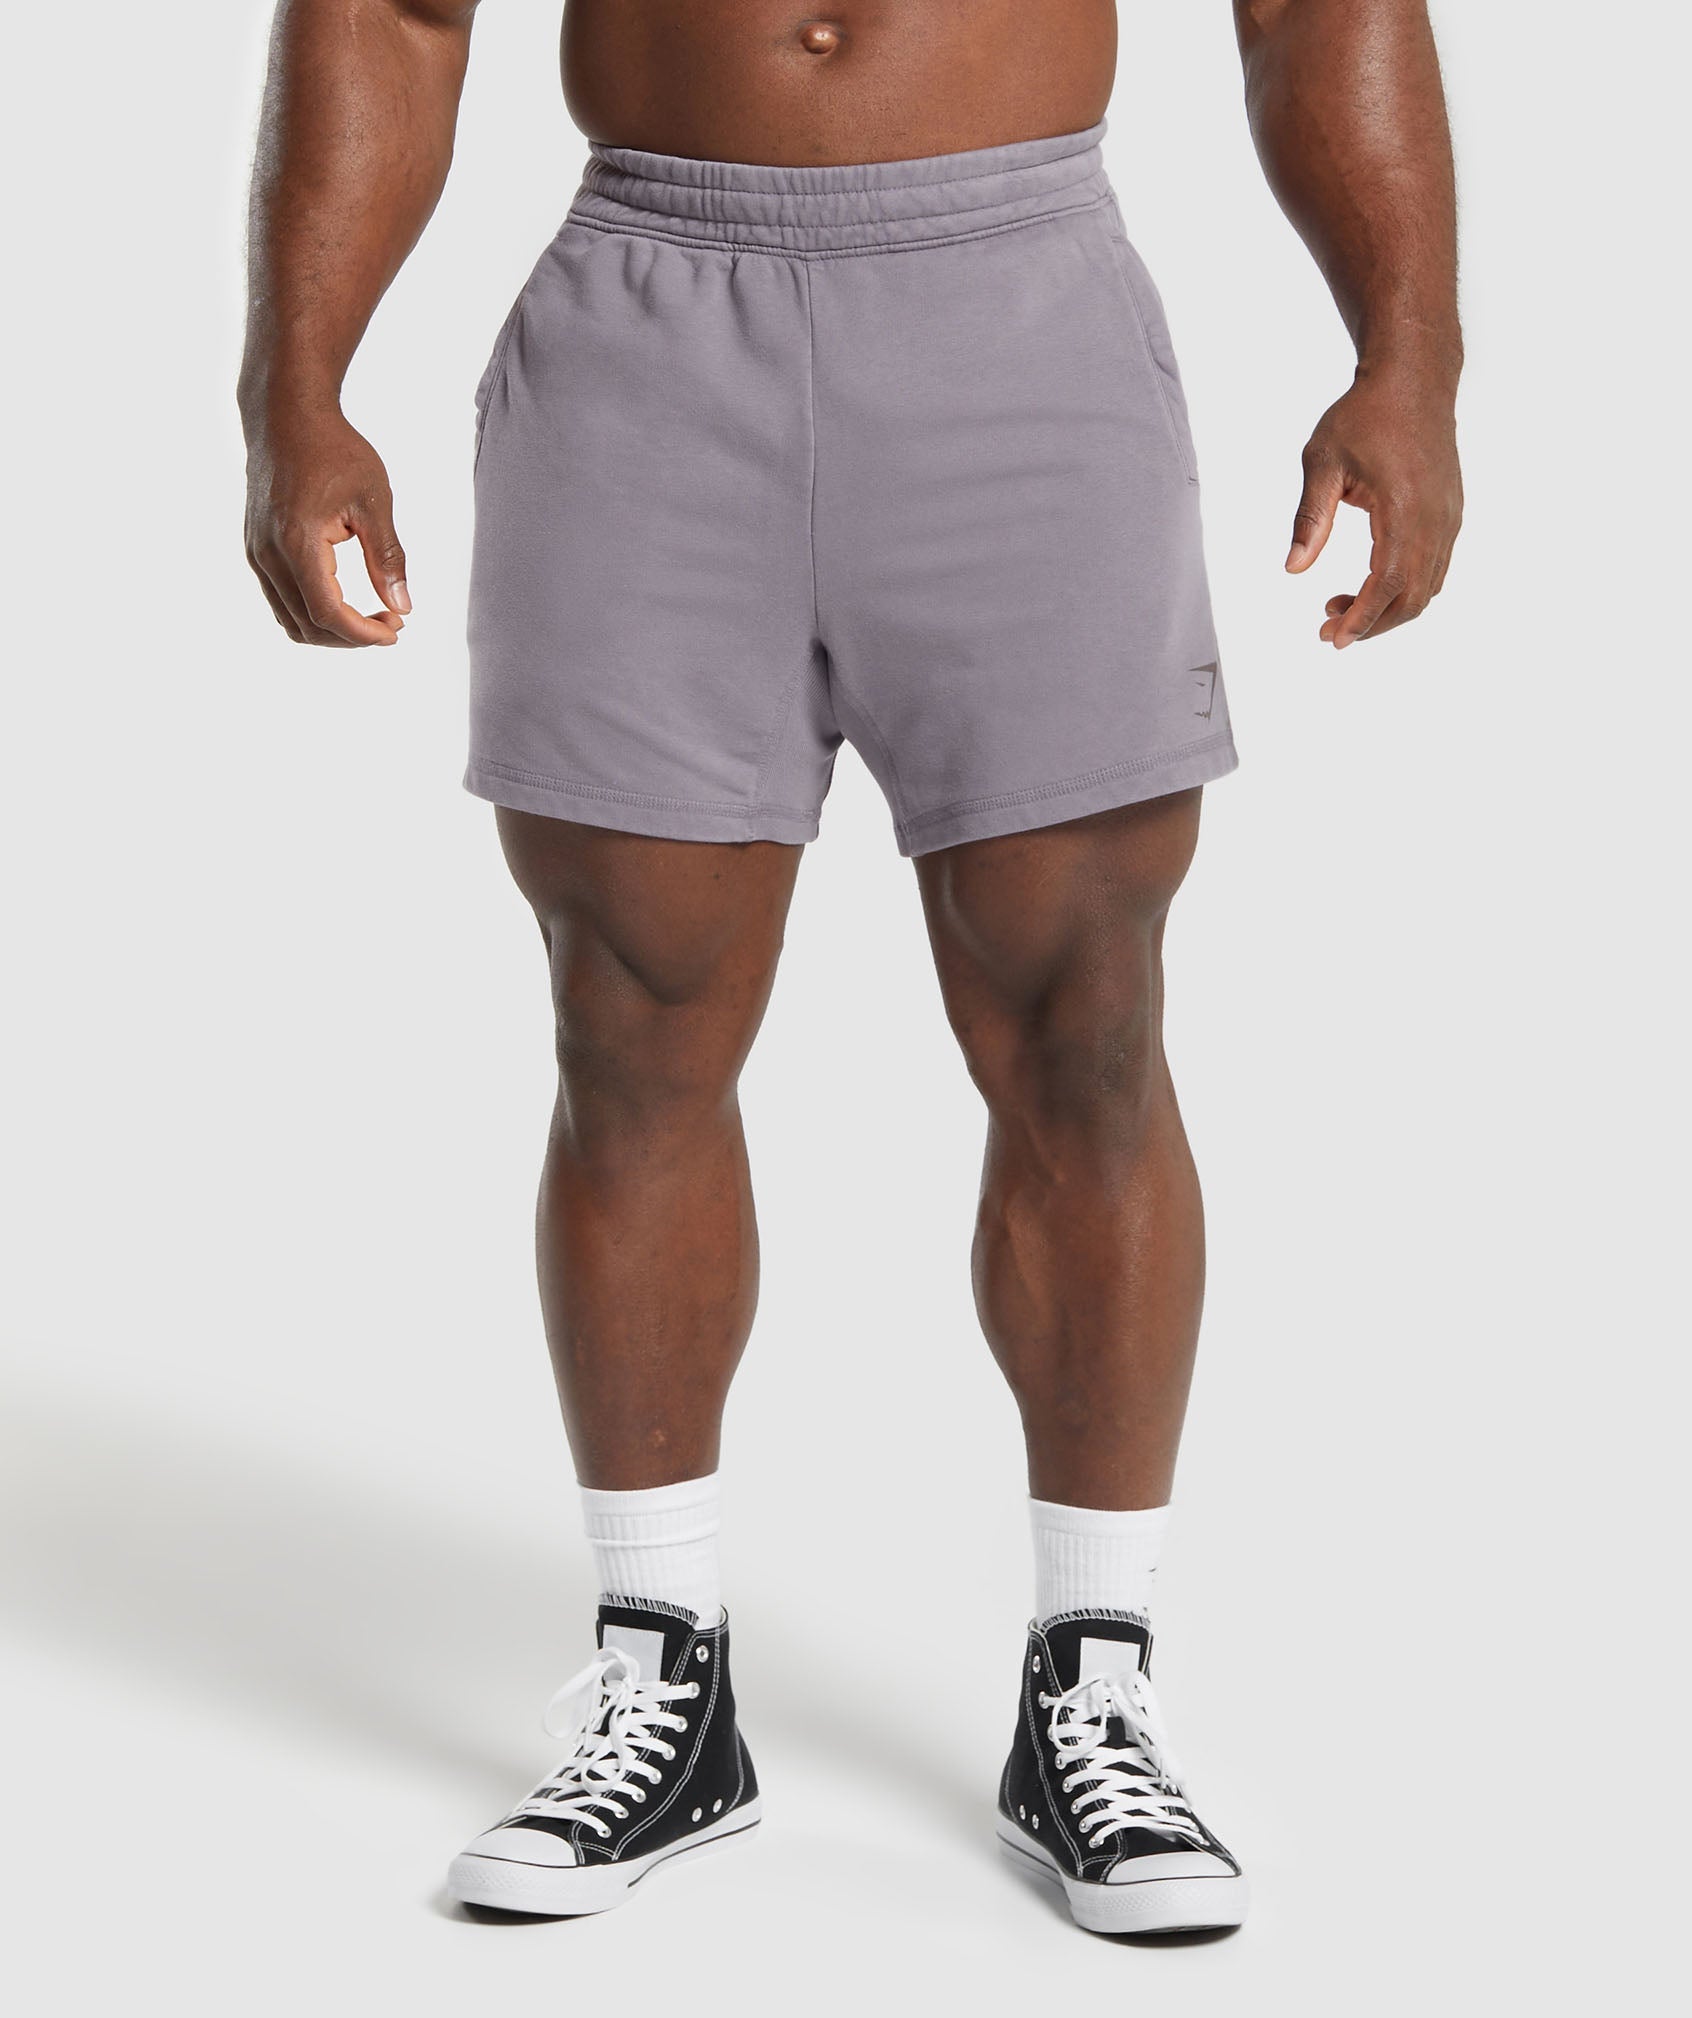 Gymshark Heritage 5 Shorts - Smokey Grey